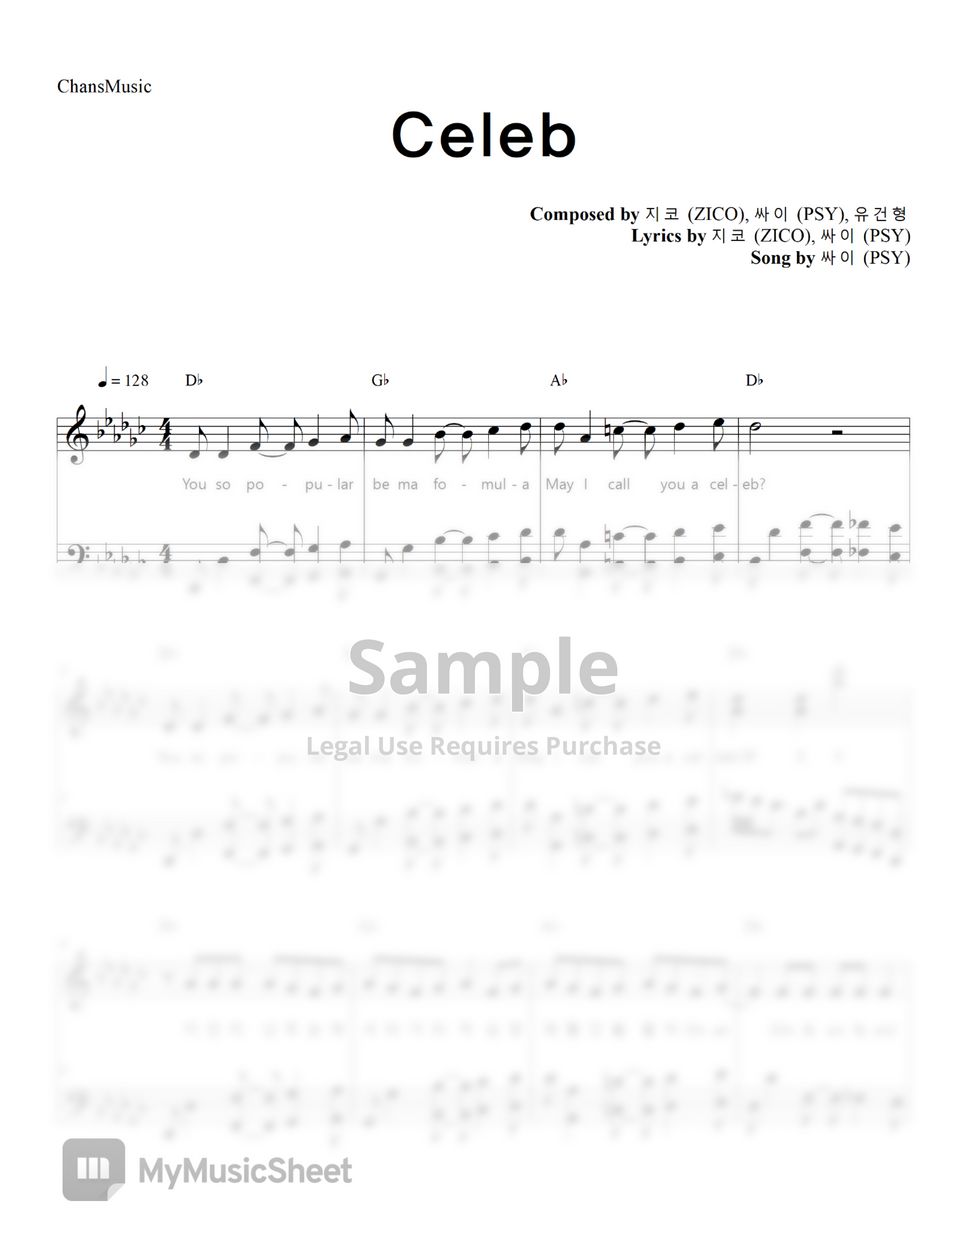 PSY - Celeb (코드, 가사 포함) by ChansMusic